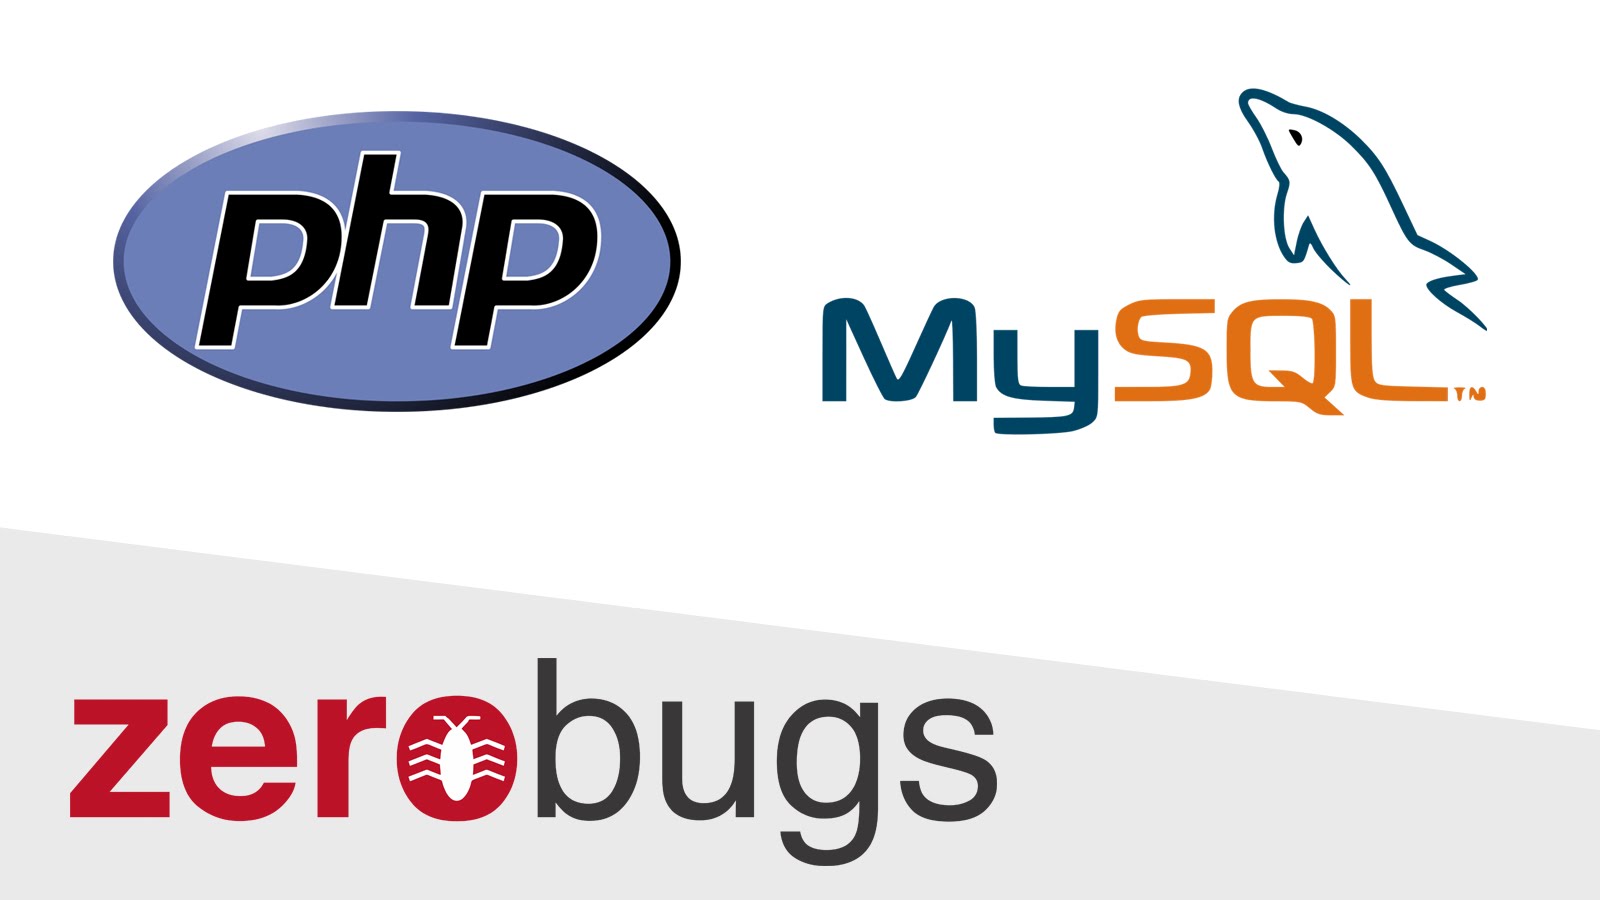 Https com l php u. Php MYSQL. Картинка php MYSQL. Интернет магазин php. Php MYSQL лого.